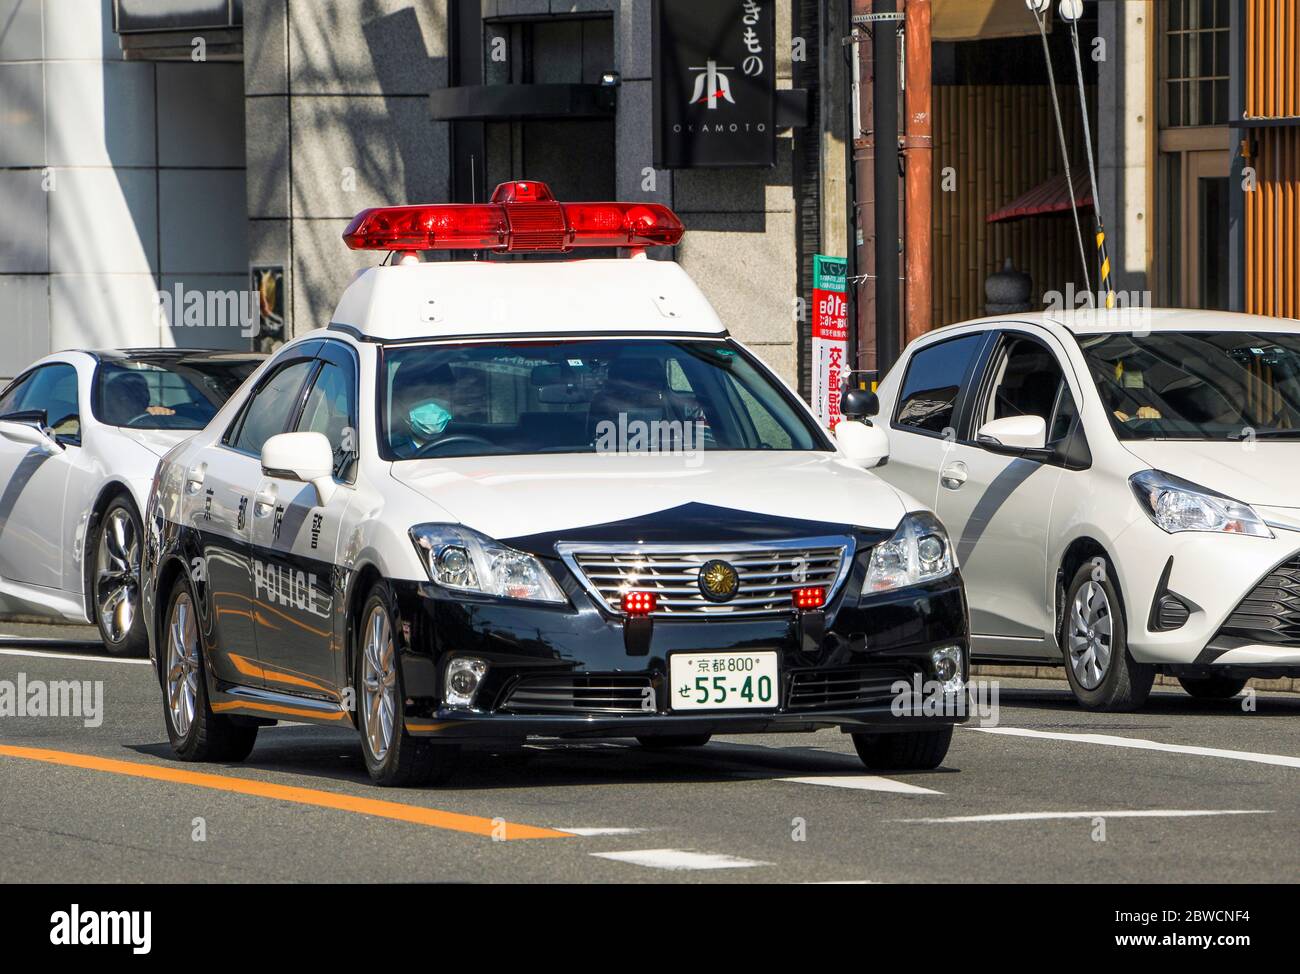 Japanese police patrol car on the street in Kyoto, Japan Stock Photo